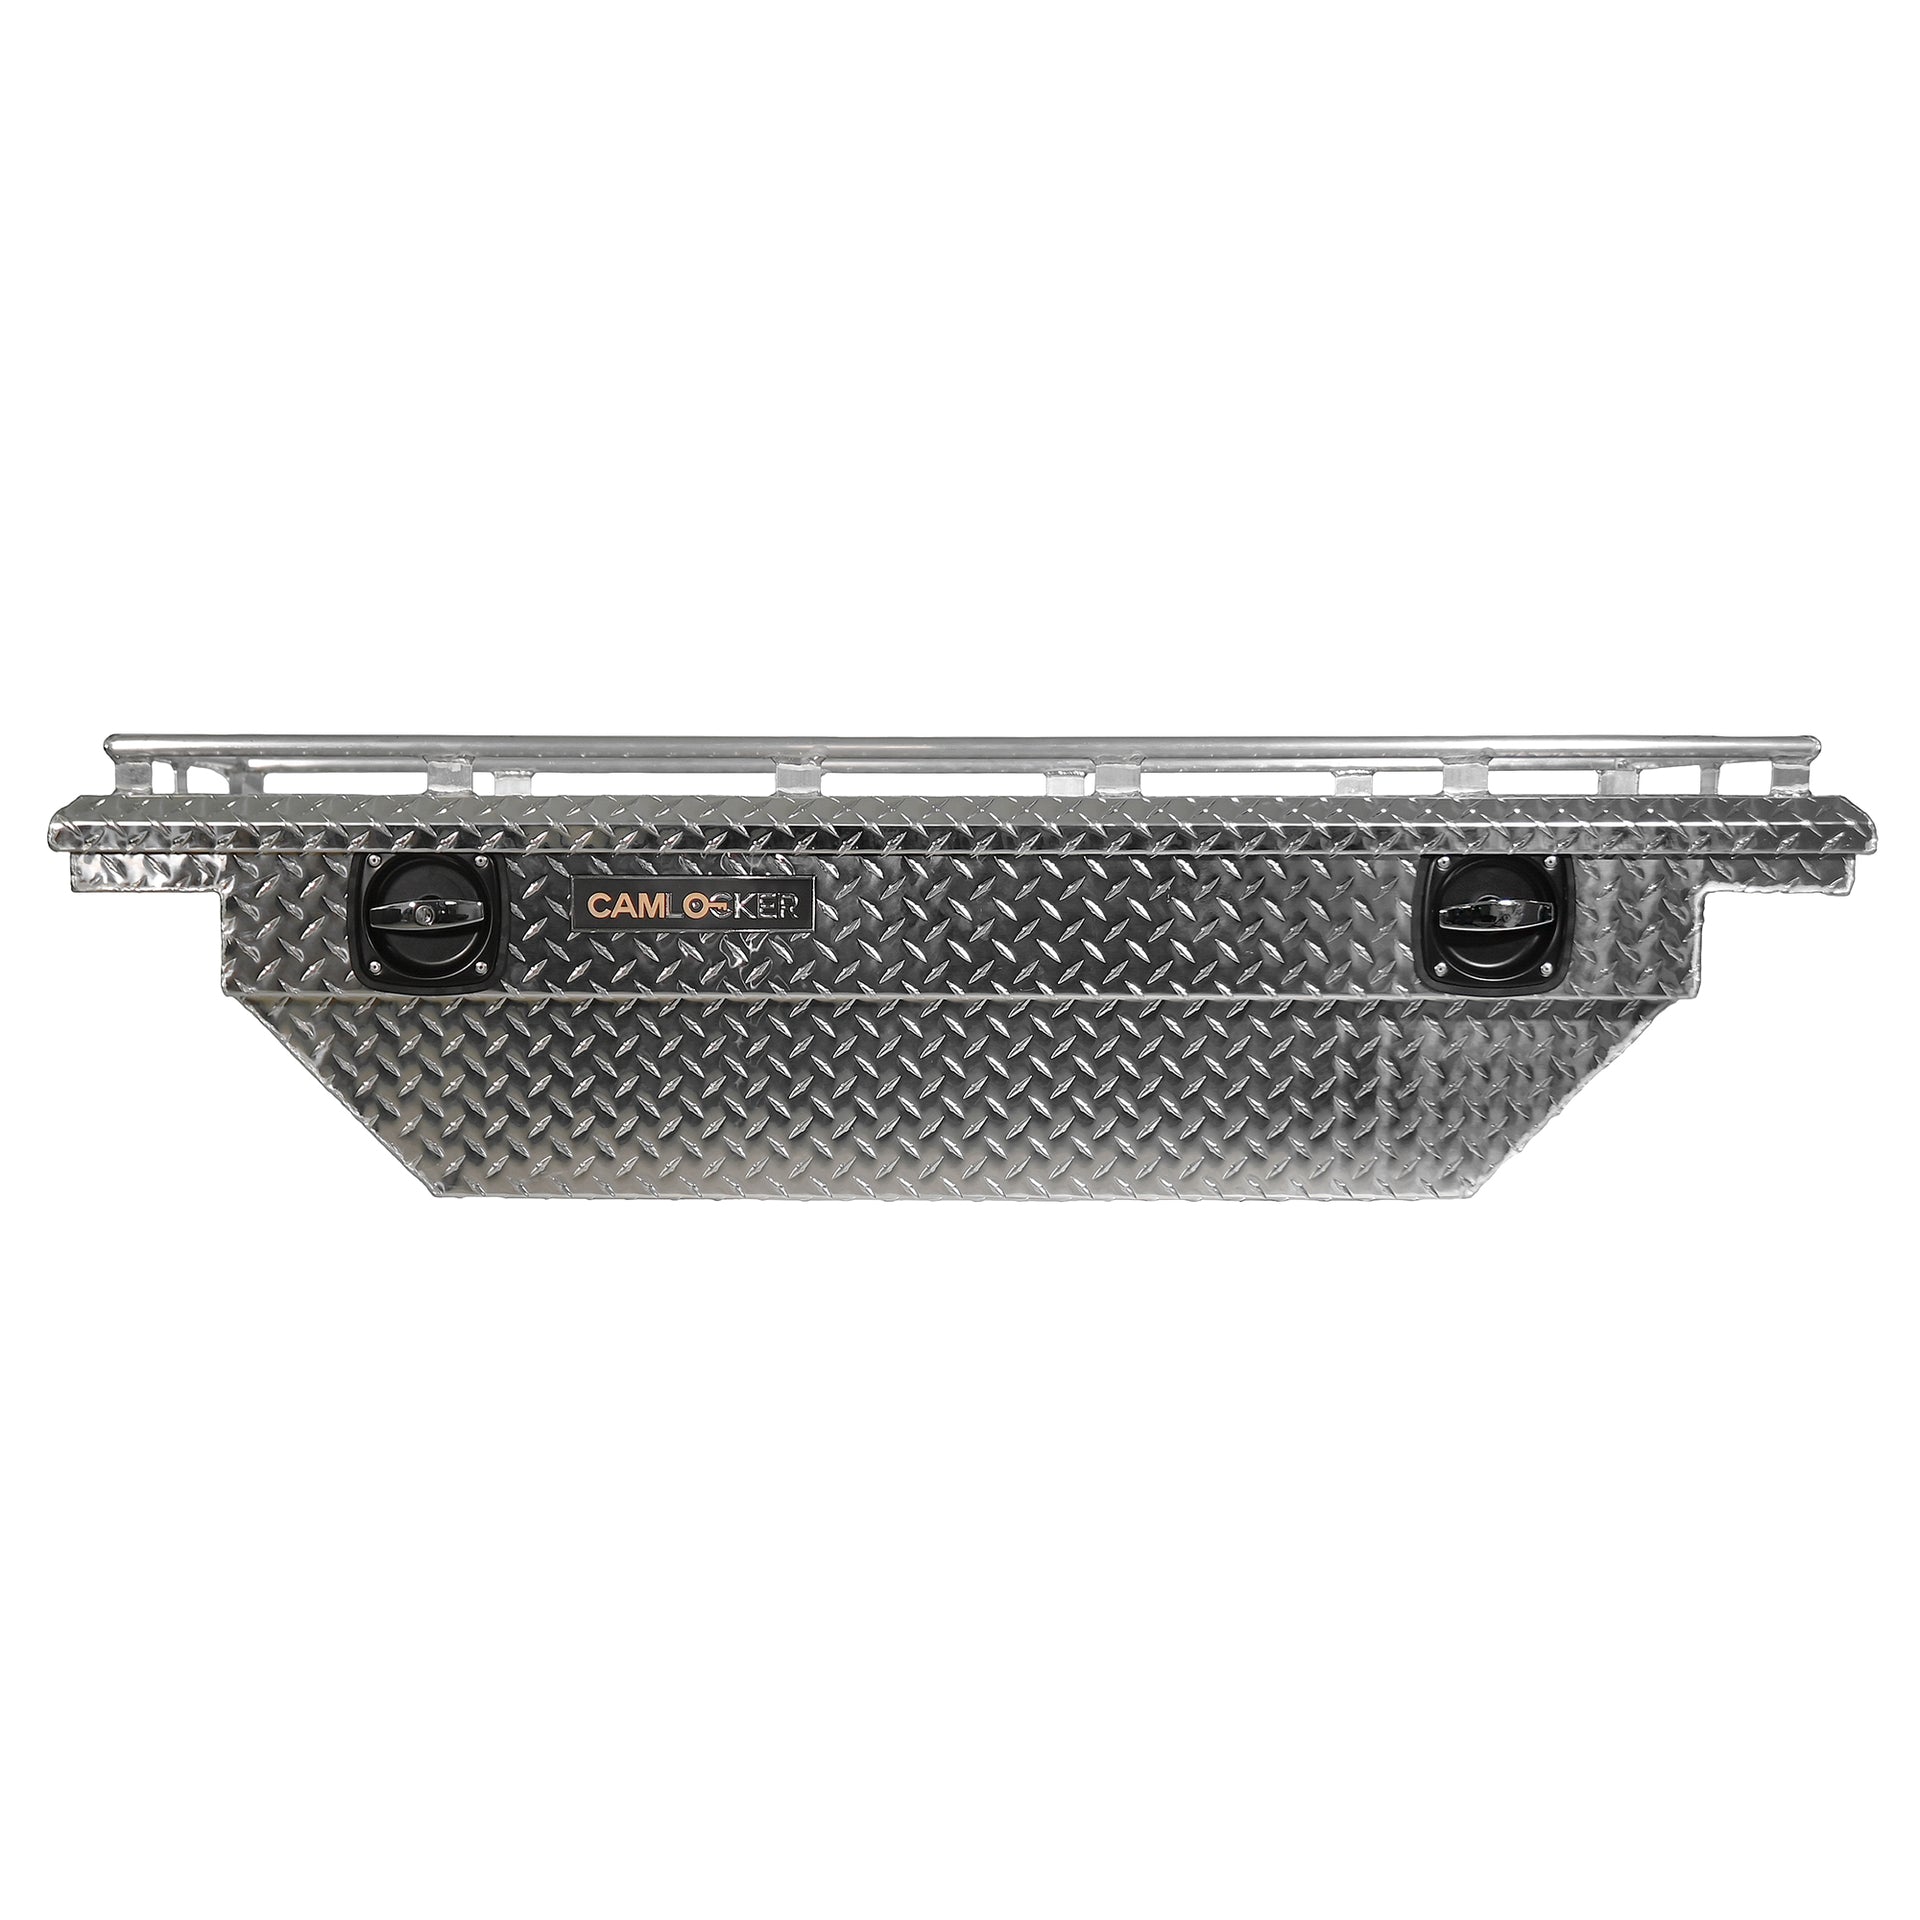 Cam-Locker Low Profile Single Lid Crossover Tool Box with Rail (Tool Box Polished)